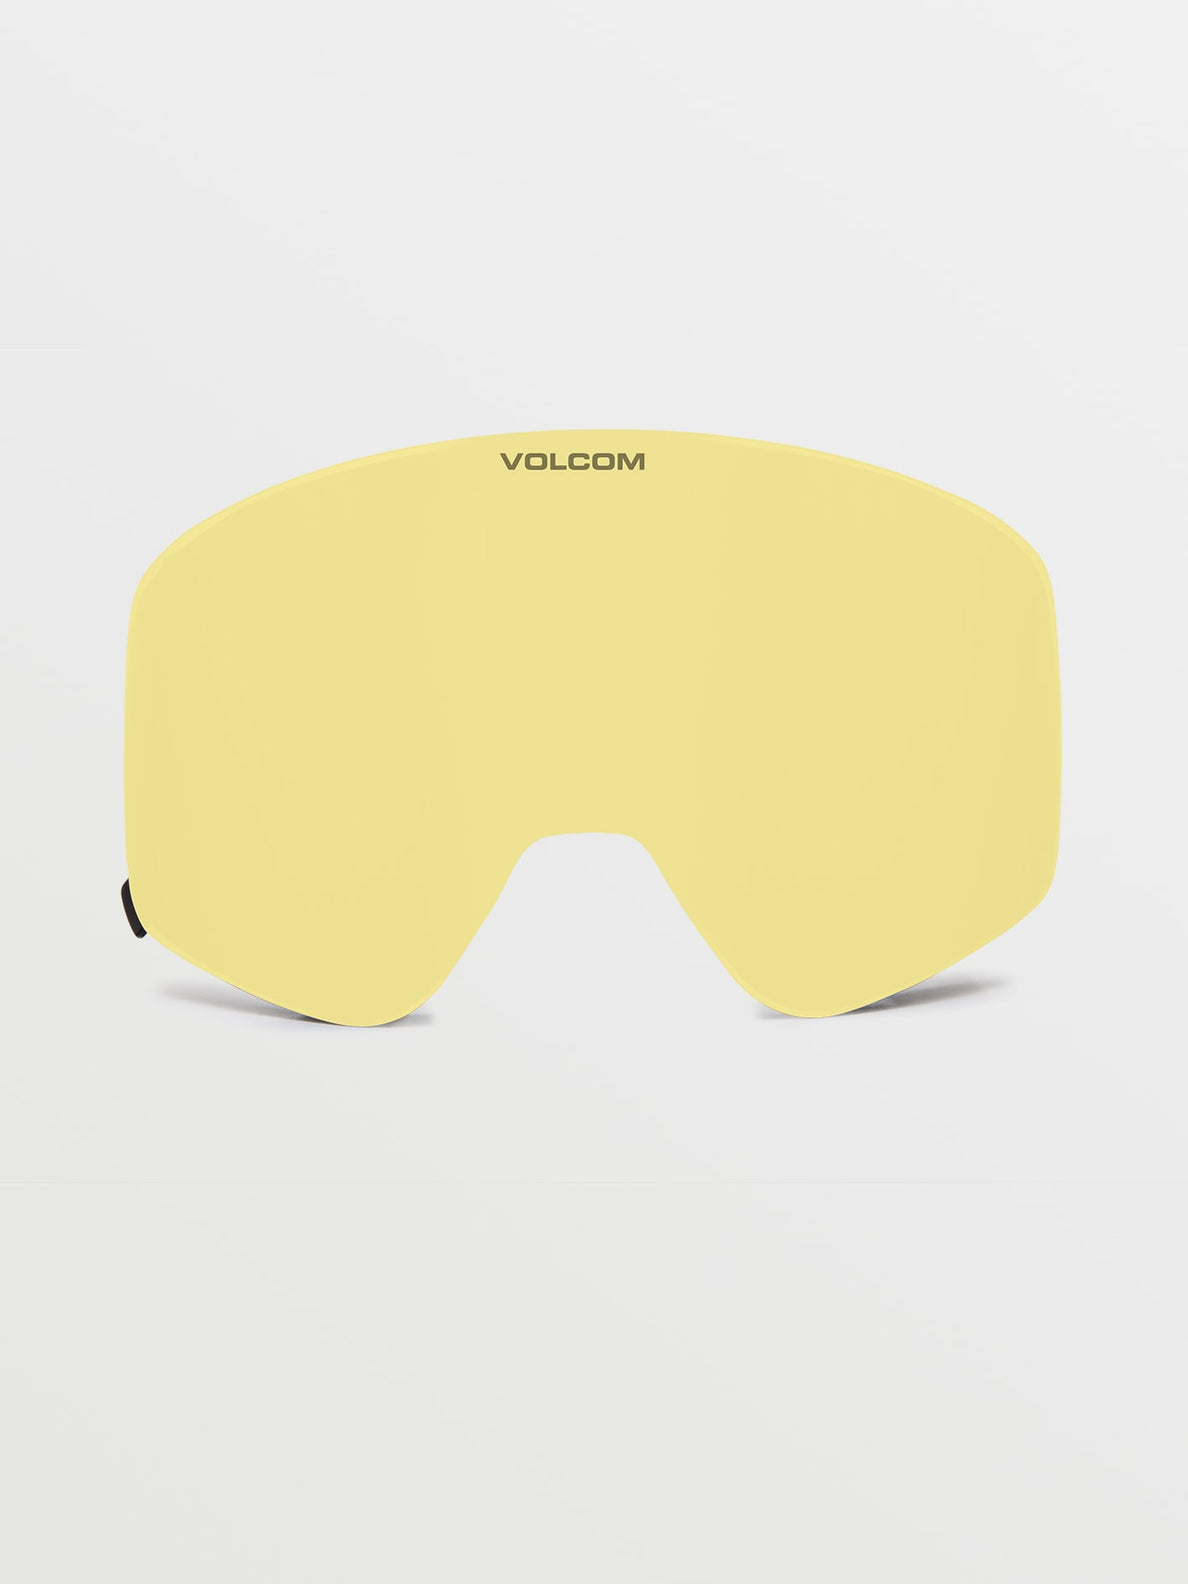 Odyssey Goggle - Slate Blue / Blue Chrome